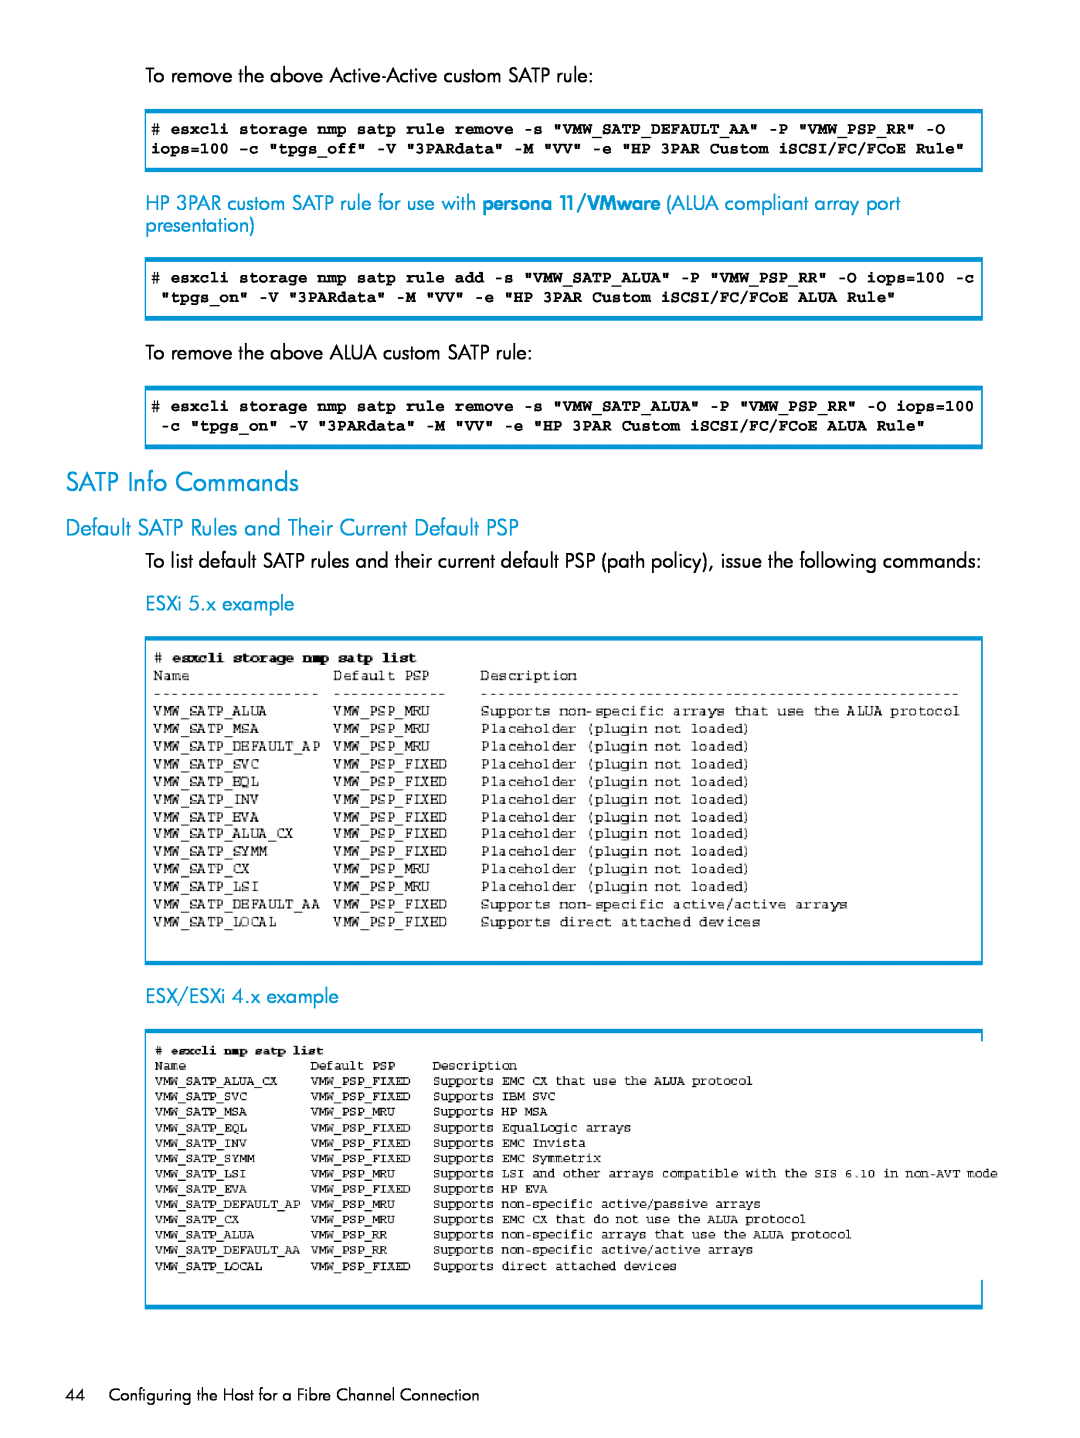 HP QR516B manual SATP Info Commands, Default SATP Rules and Their Current Default PSP, ESX/ESXi 4.x example 